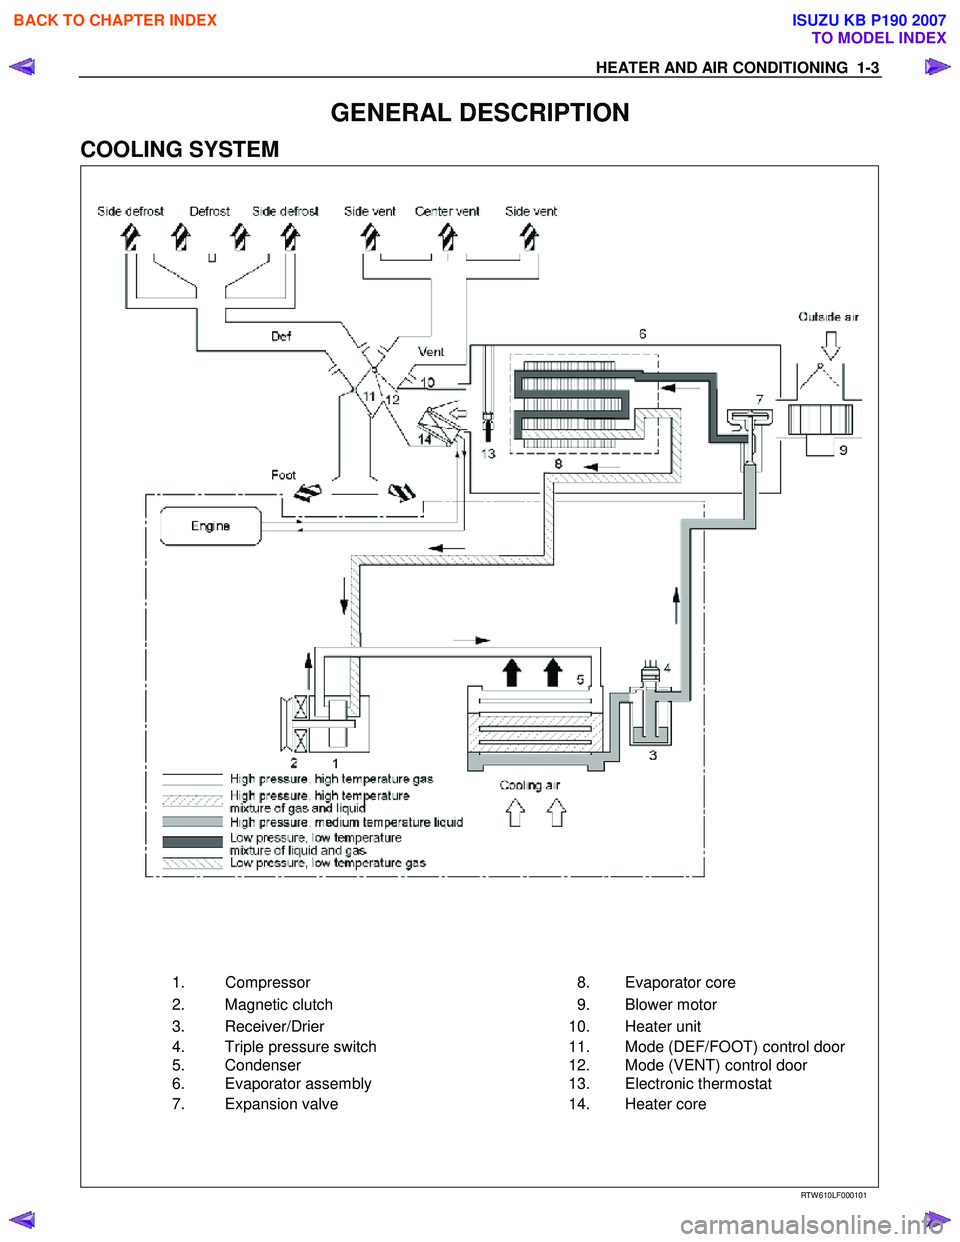 ISUZU KB P190 2007  Workshop Repair Manual HEATER AND AIR CONDITIONING  1-3 
GENERAL DESCRIPTION 
COOLING SYSTEM 
   
 
 
 
 
 
 
 
   
  1.  
Compressor    8. 
Evaporator core 
  2.  
Magnetic clutch      9. 
Blower motor 
  3.  
Receiver/Dri